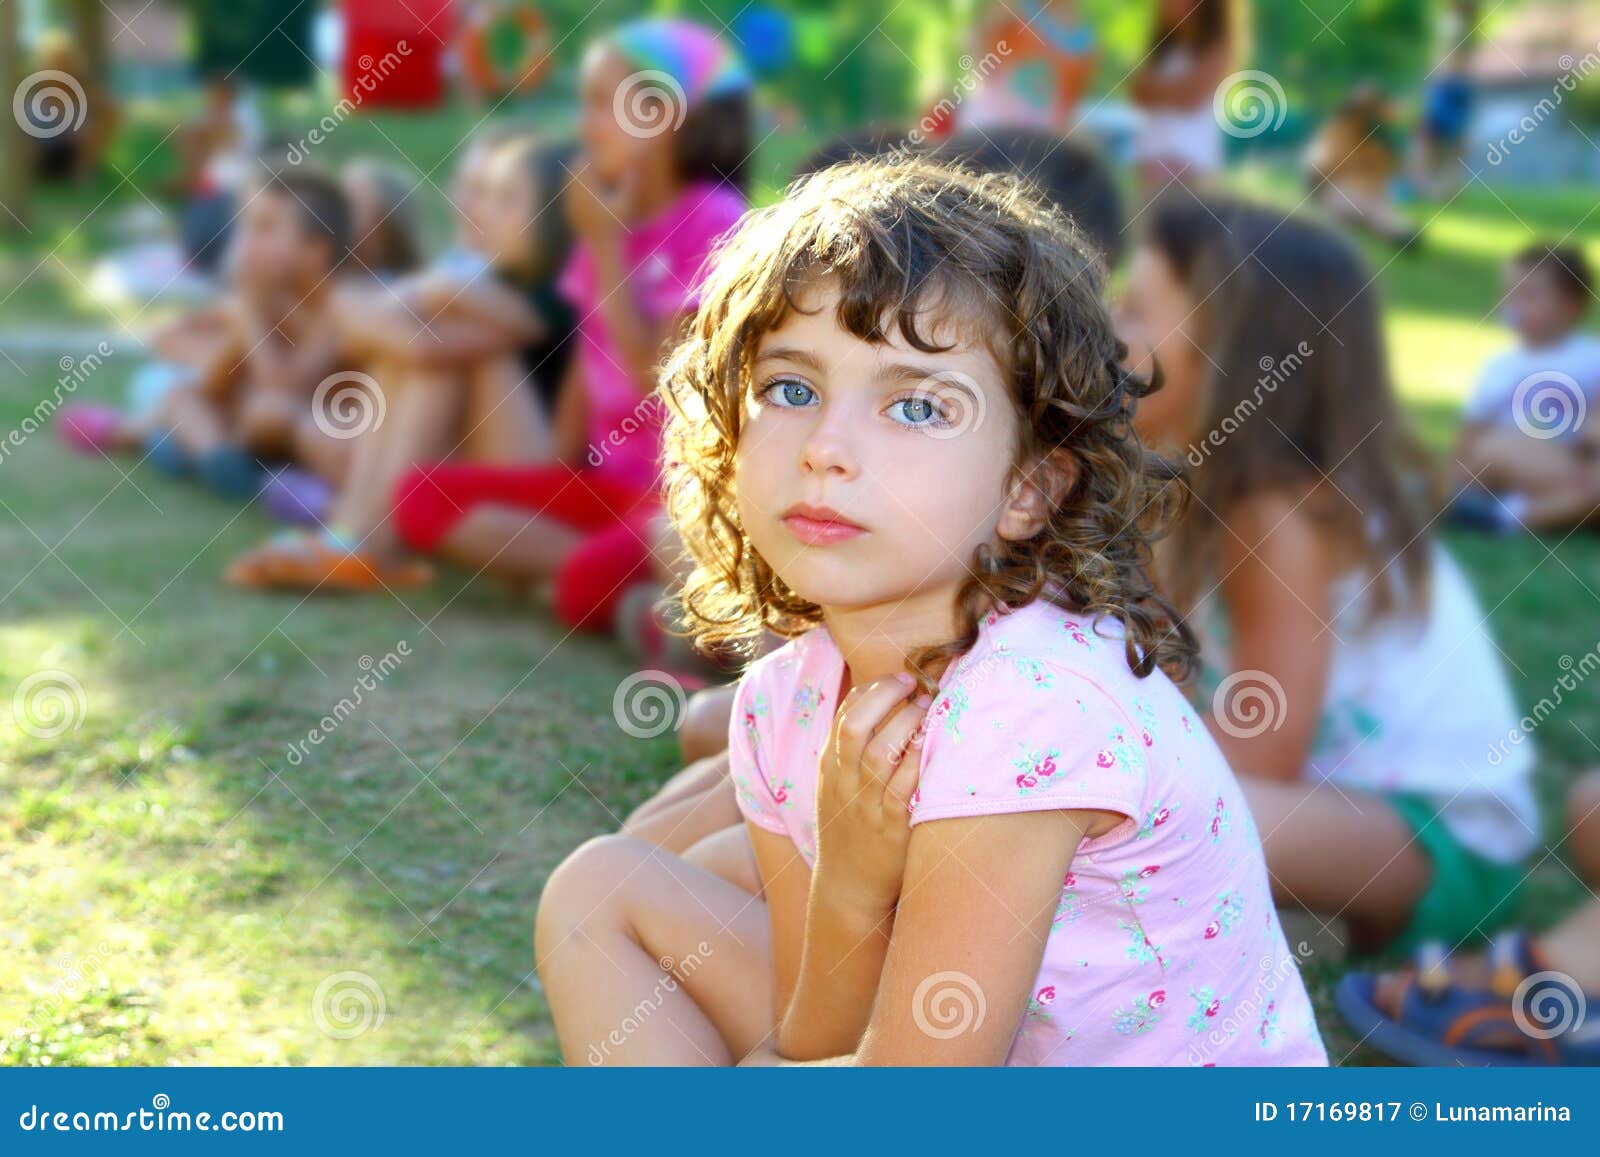 girl spectator little children looking show park